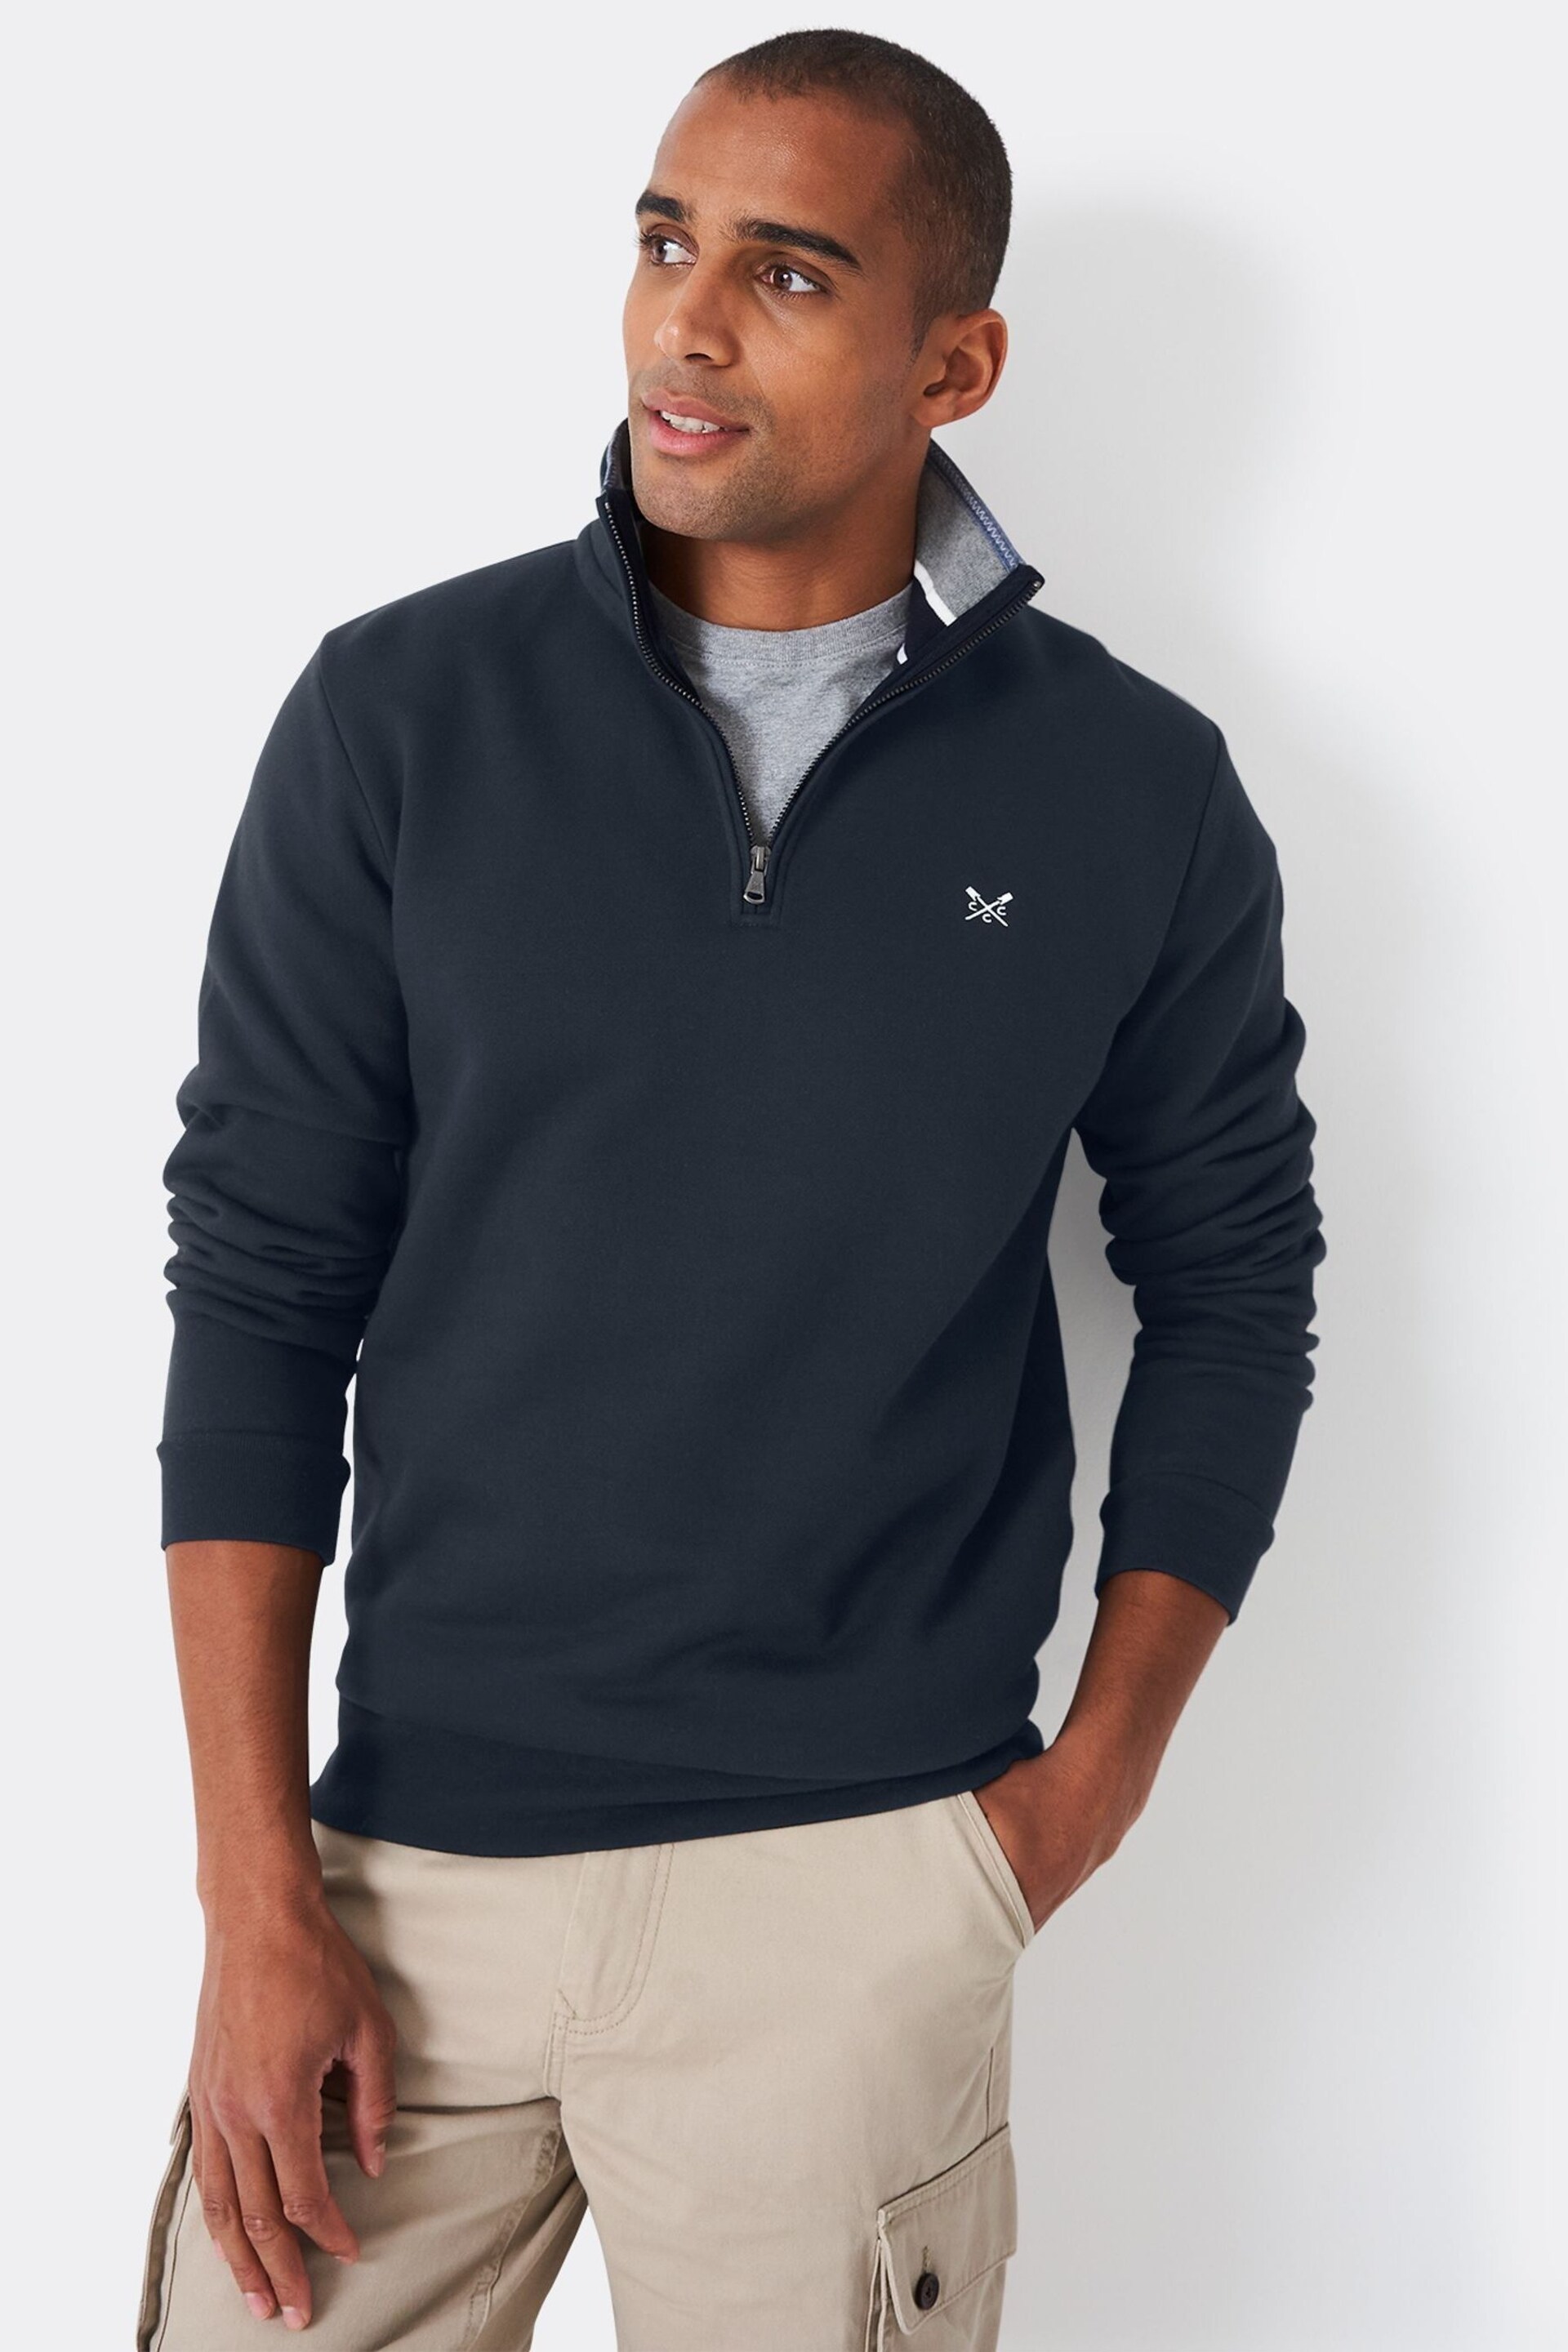 Crew Clothing Classic Half Zip Sweater - Image 1 of 5